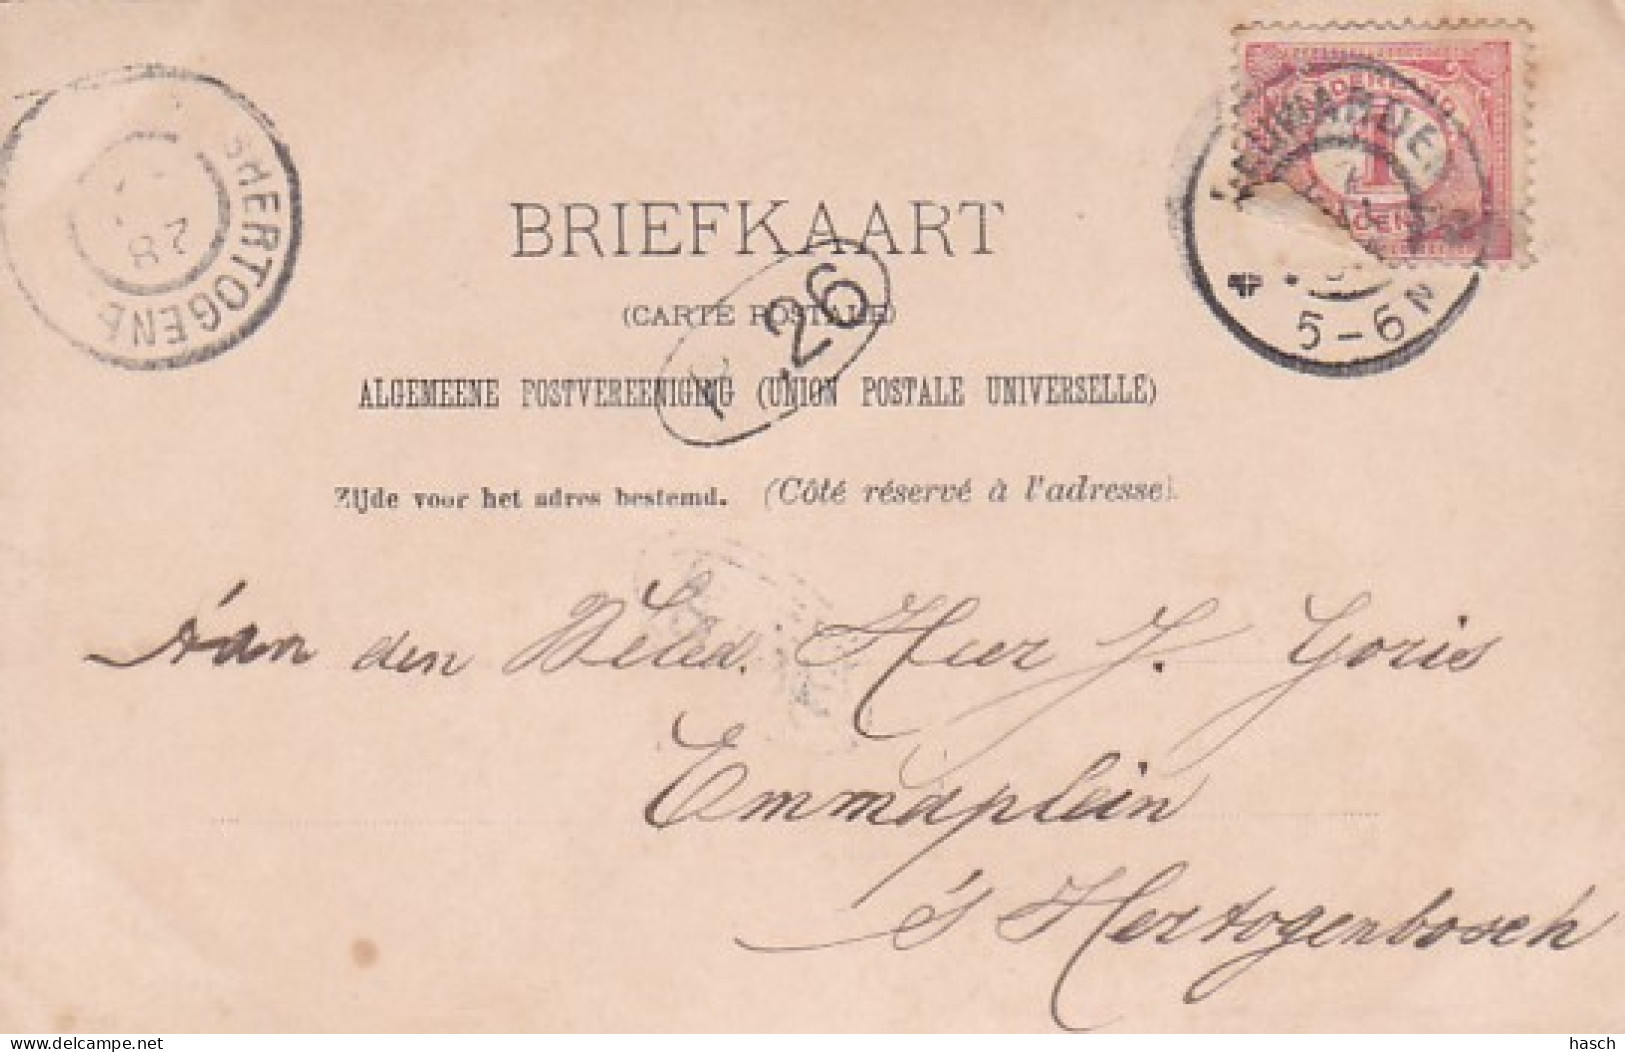 238917Leeuwarden, Willemskade. 1904(minuscule Vouwen In De Hoeken) - Leeuwarden